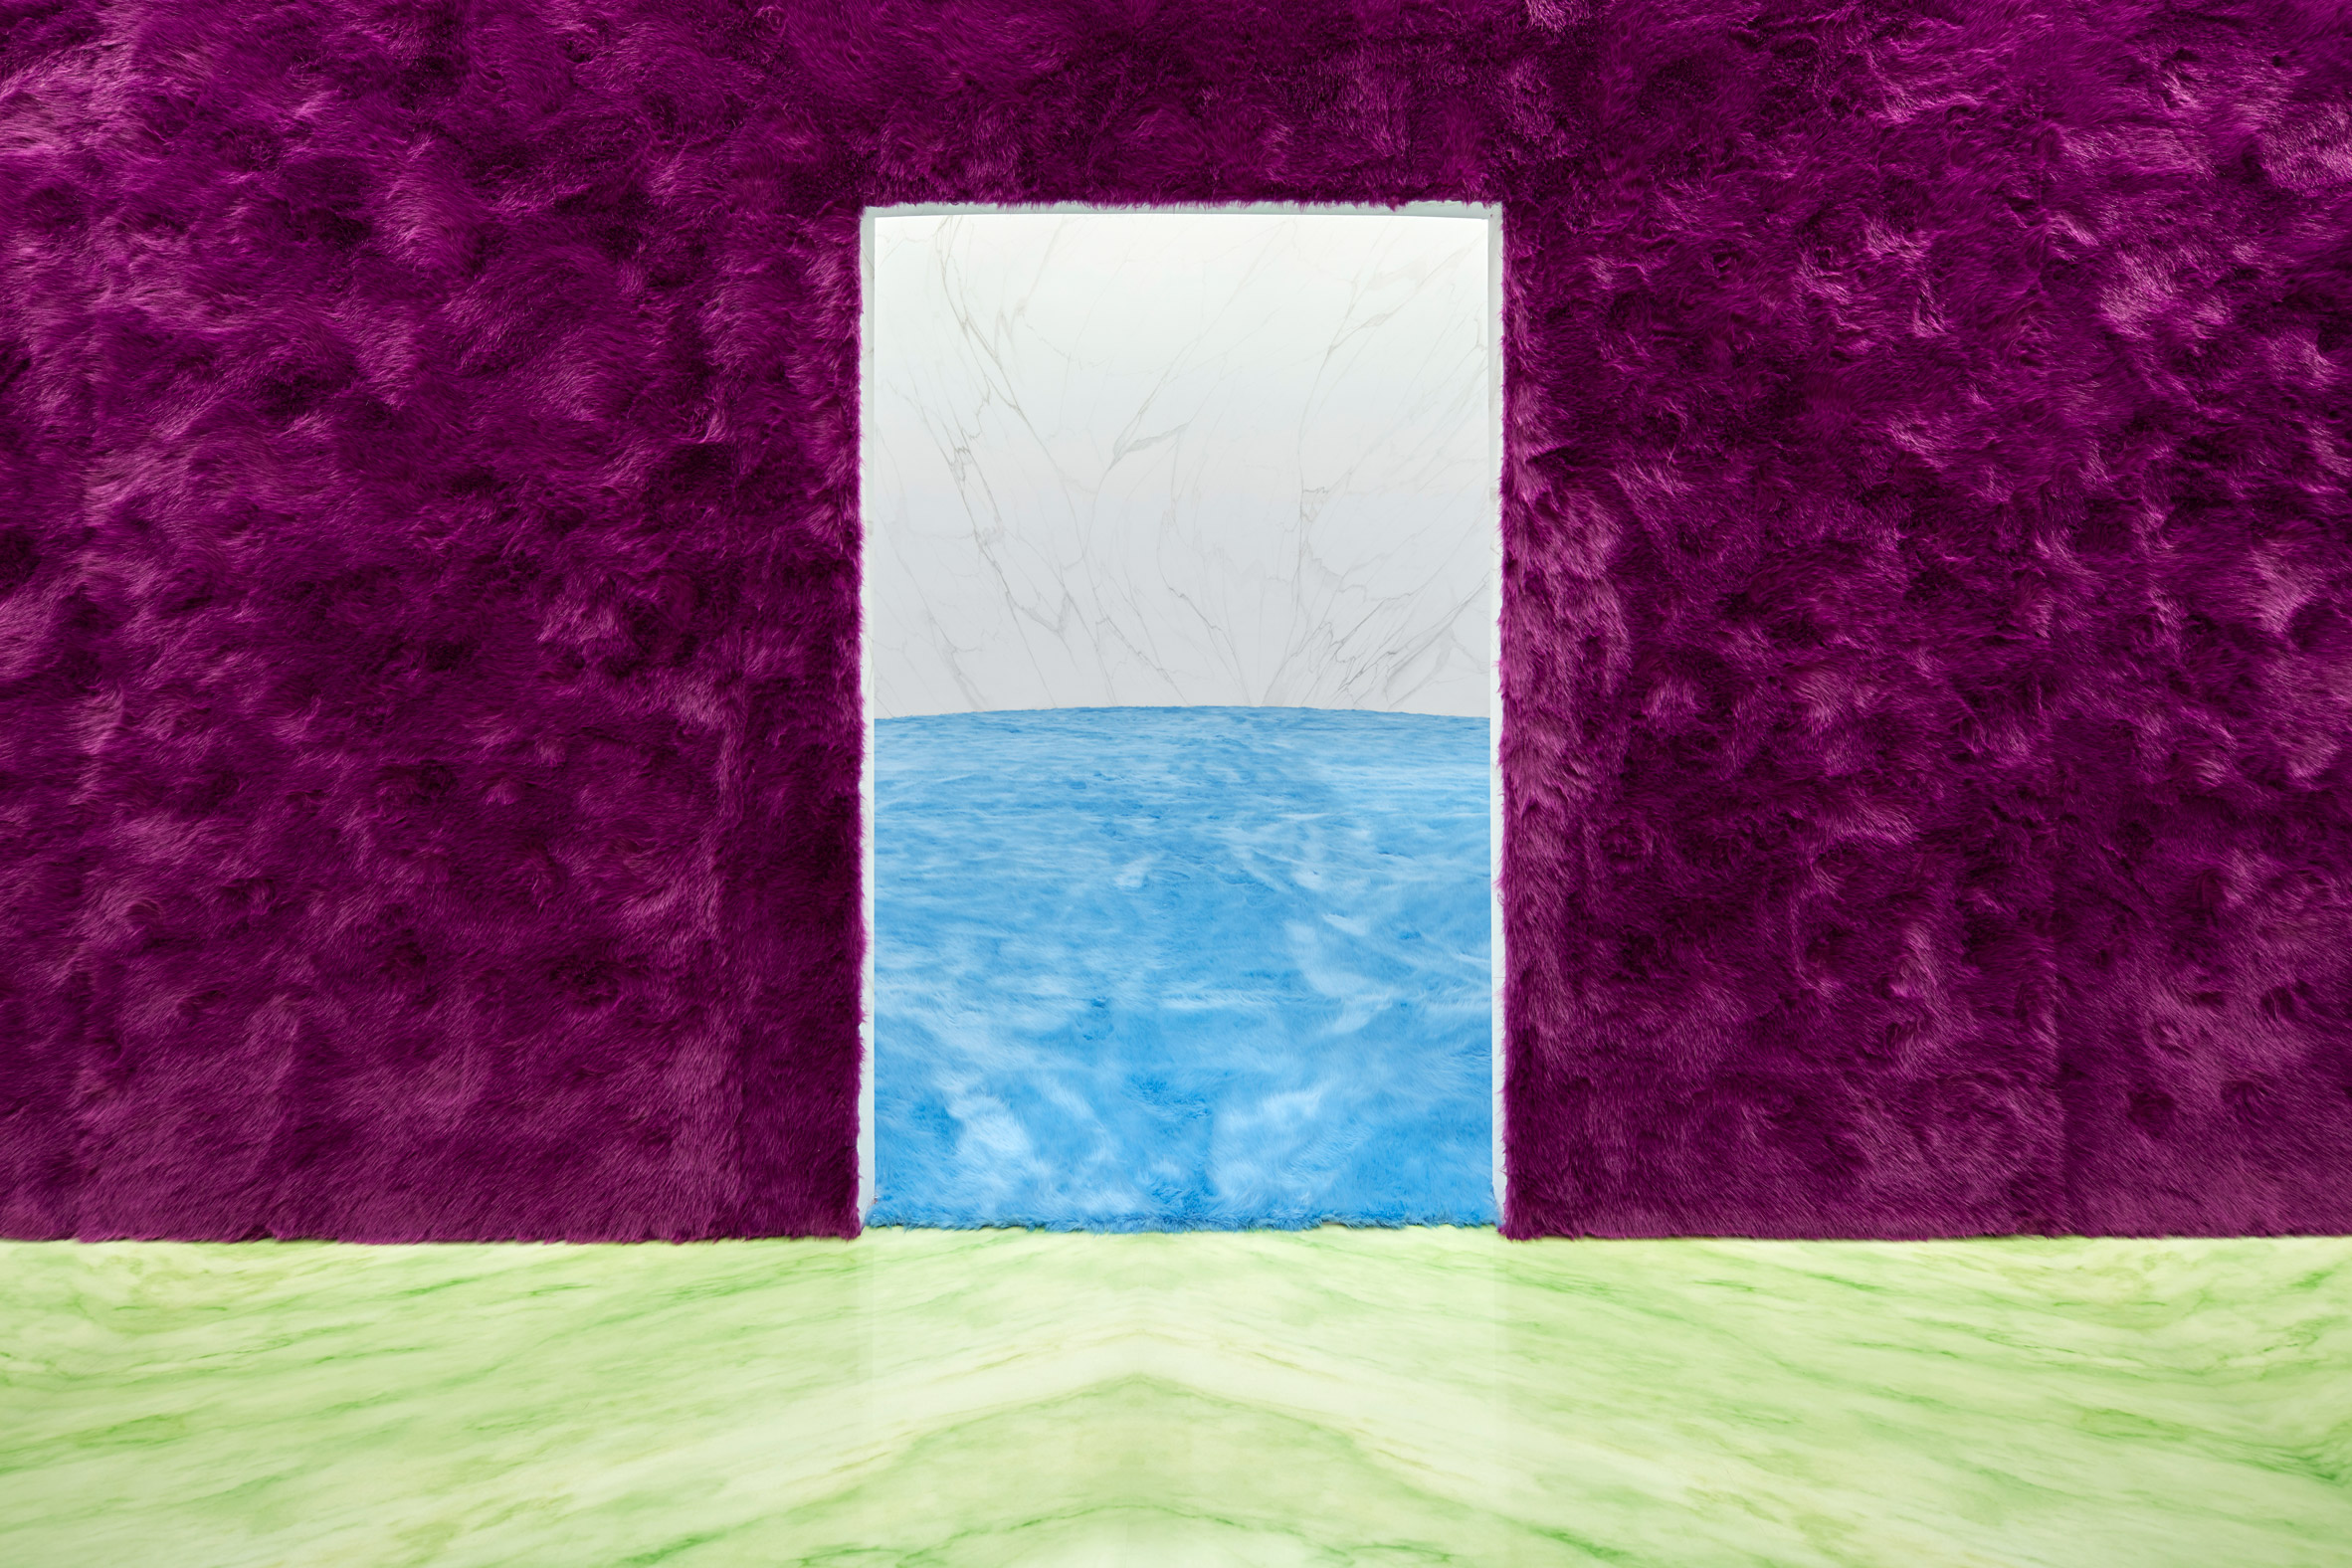 purple fur clad walls at Prada show